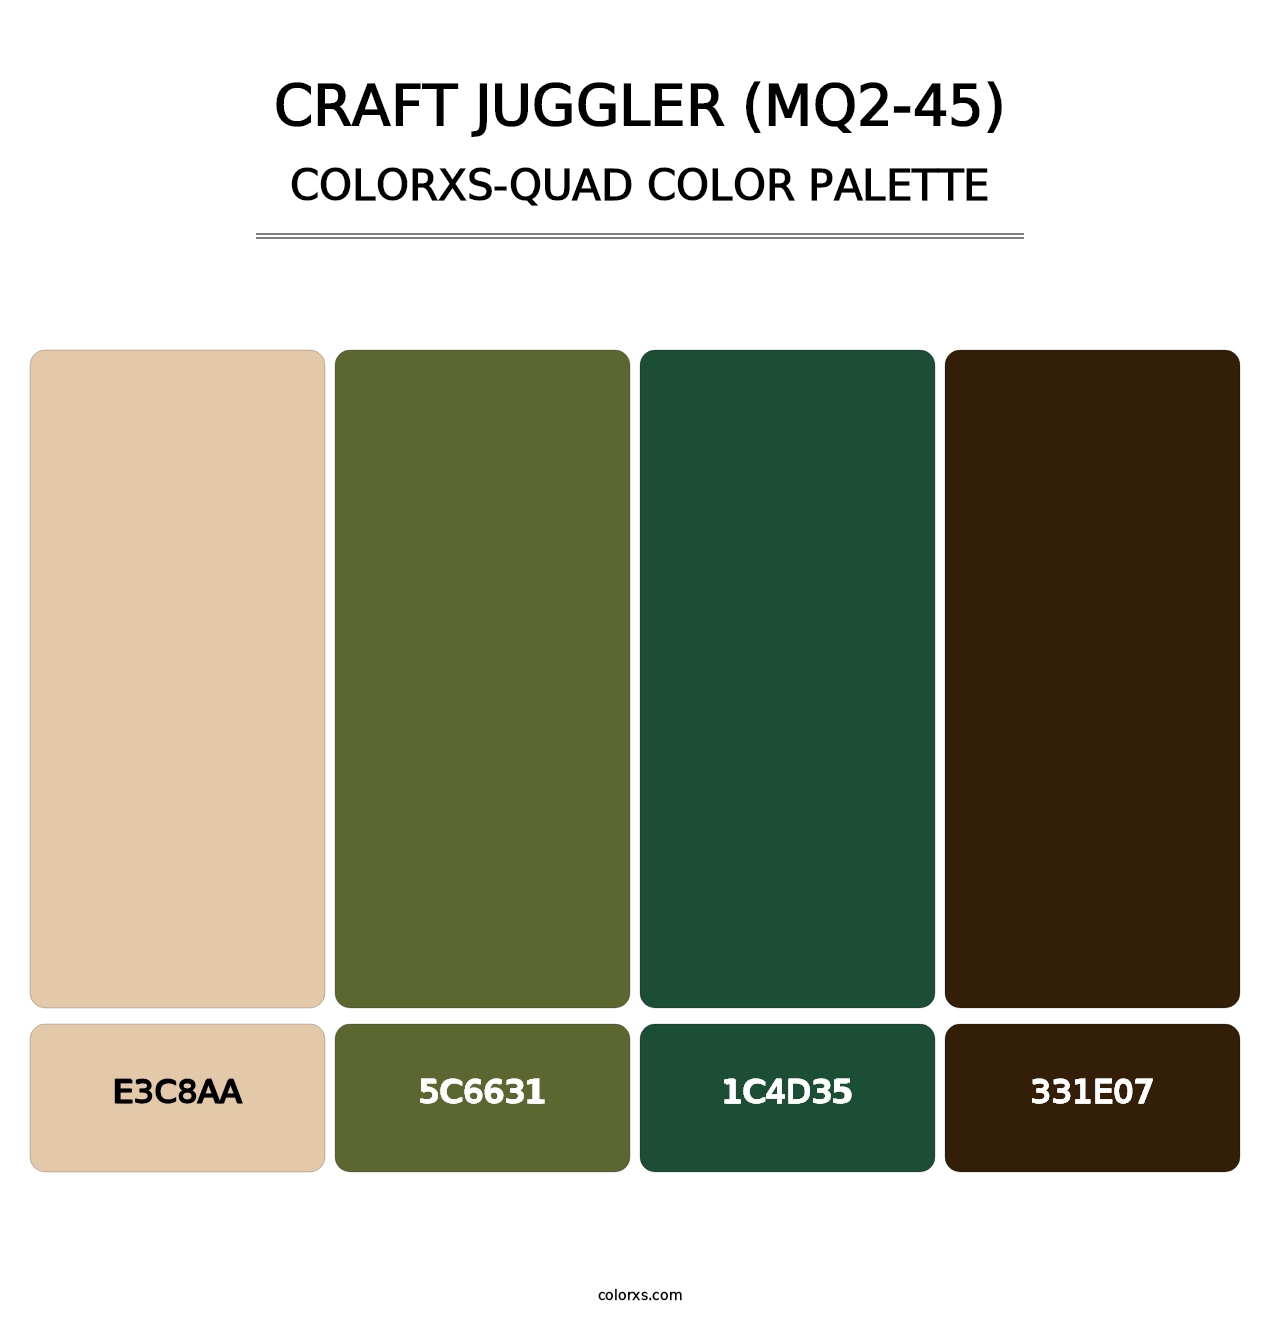 Craft Juggler (MQ2-45) - Colorxs Quad Palette